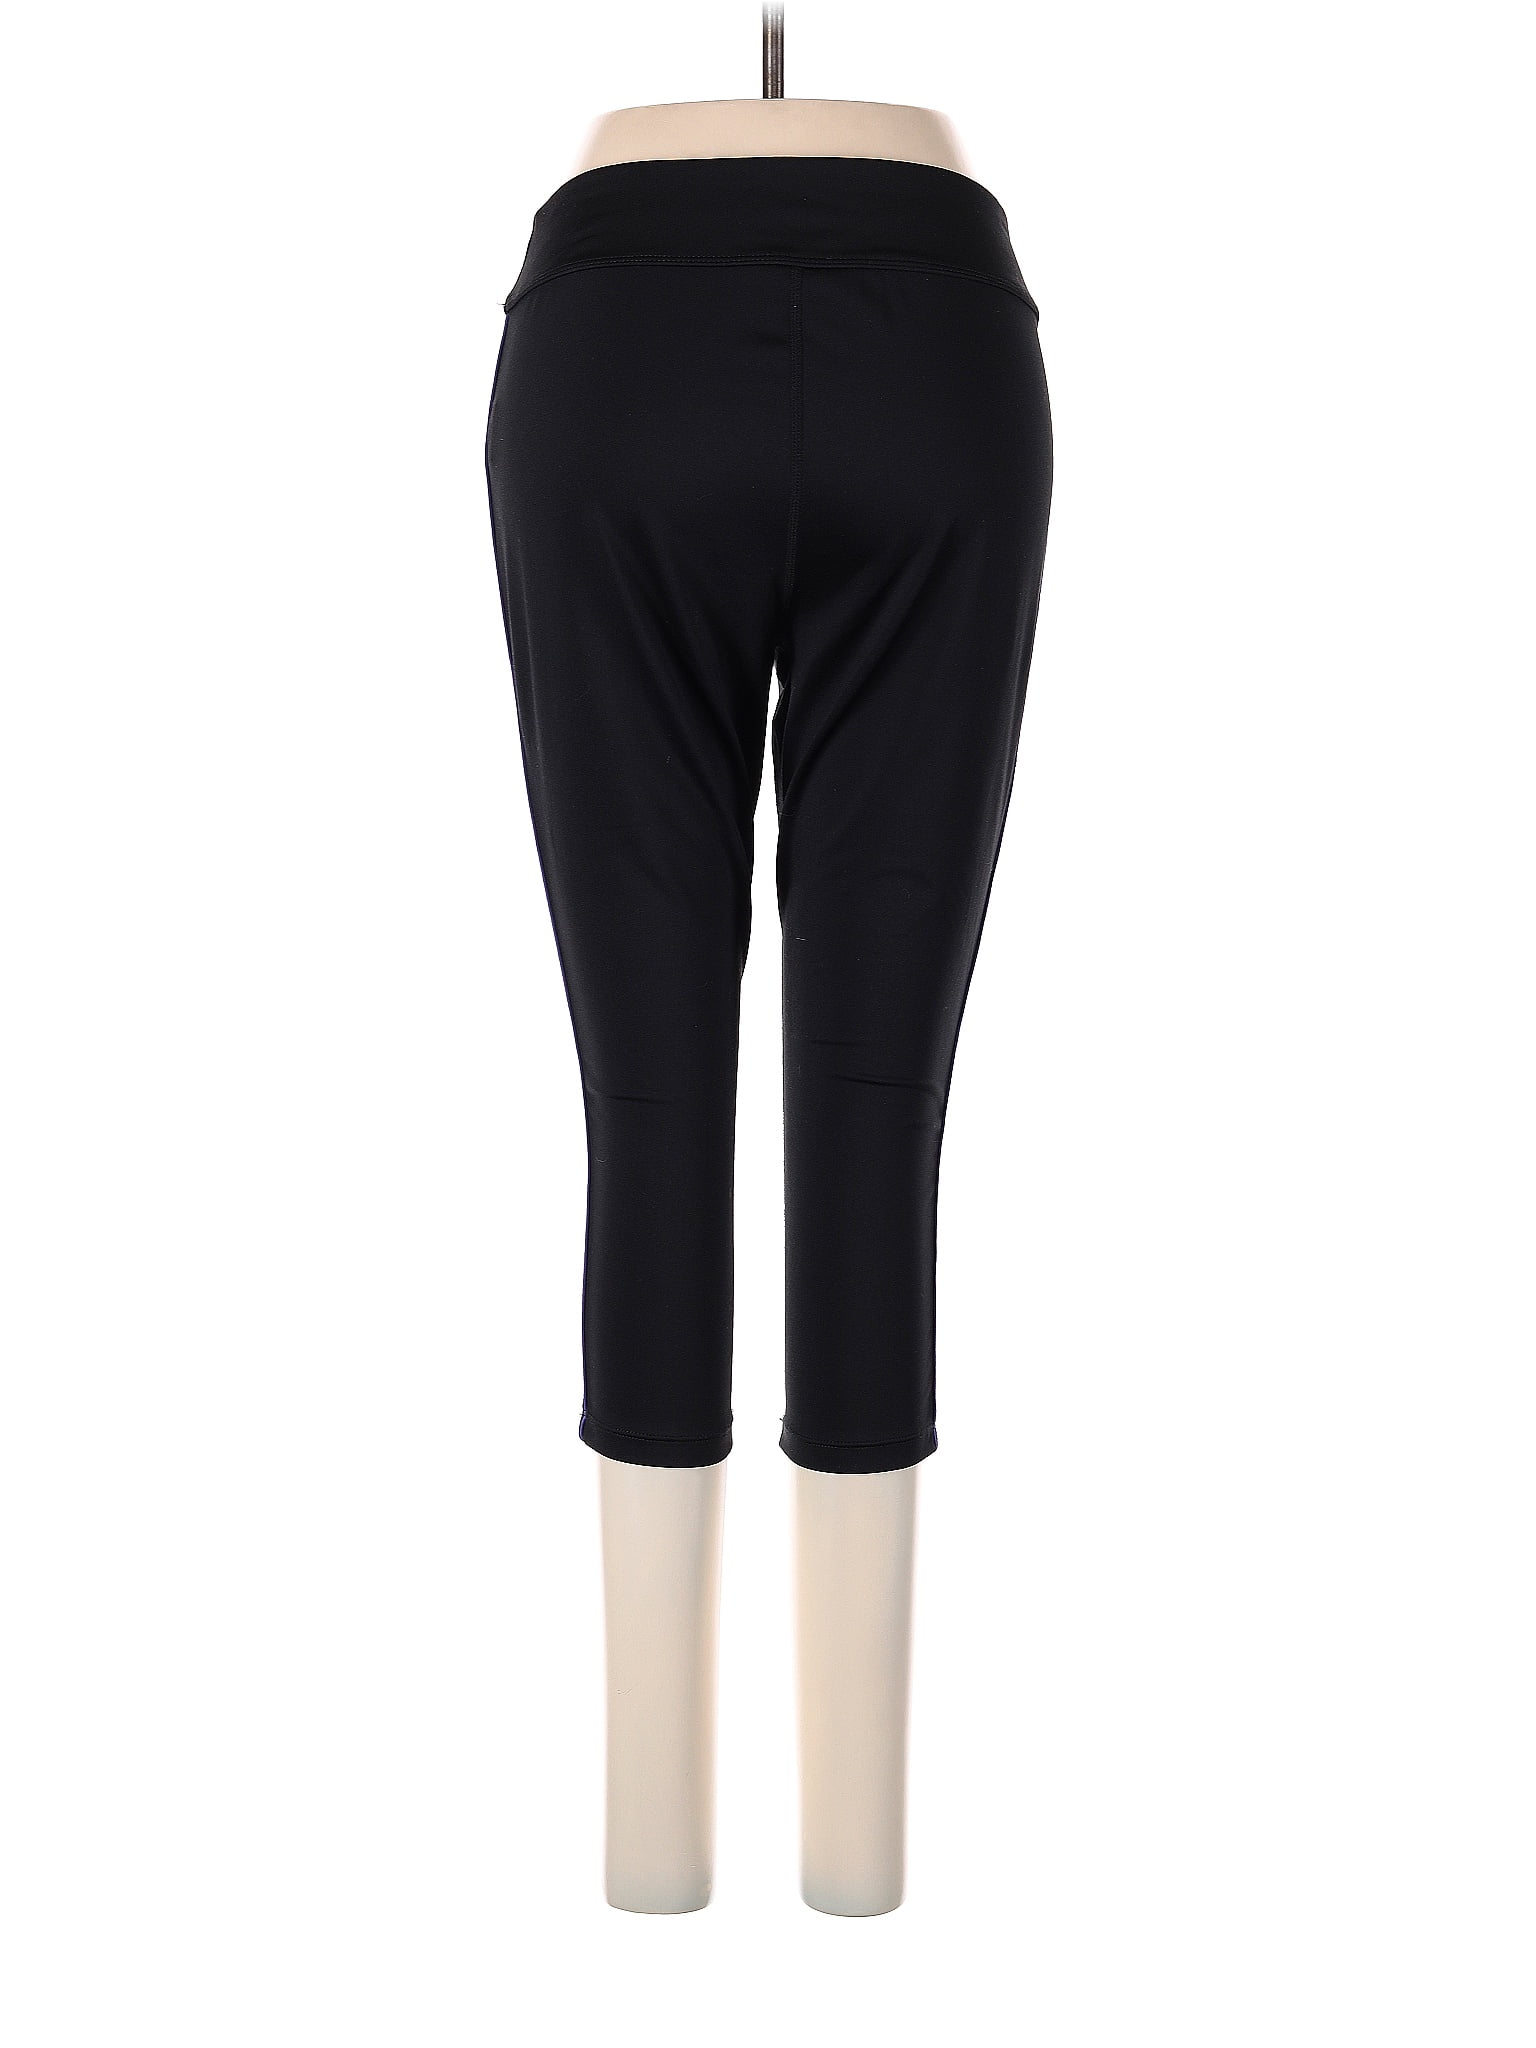 Fila Sport Solid Black Casual Pants Size XXL - 67% off